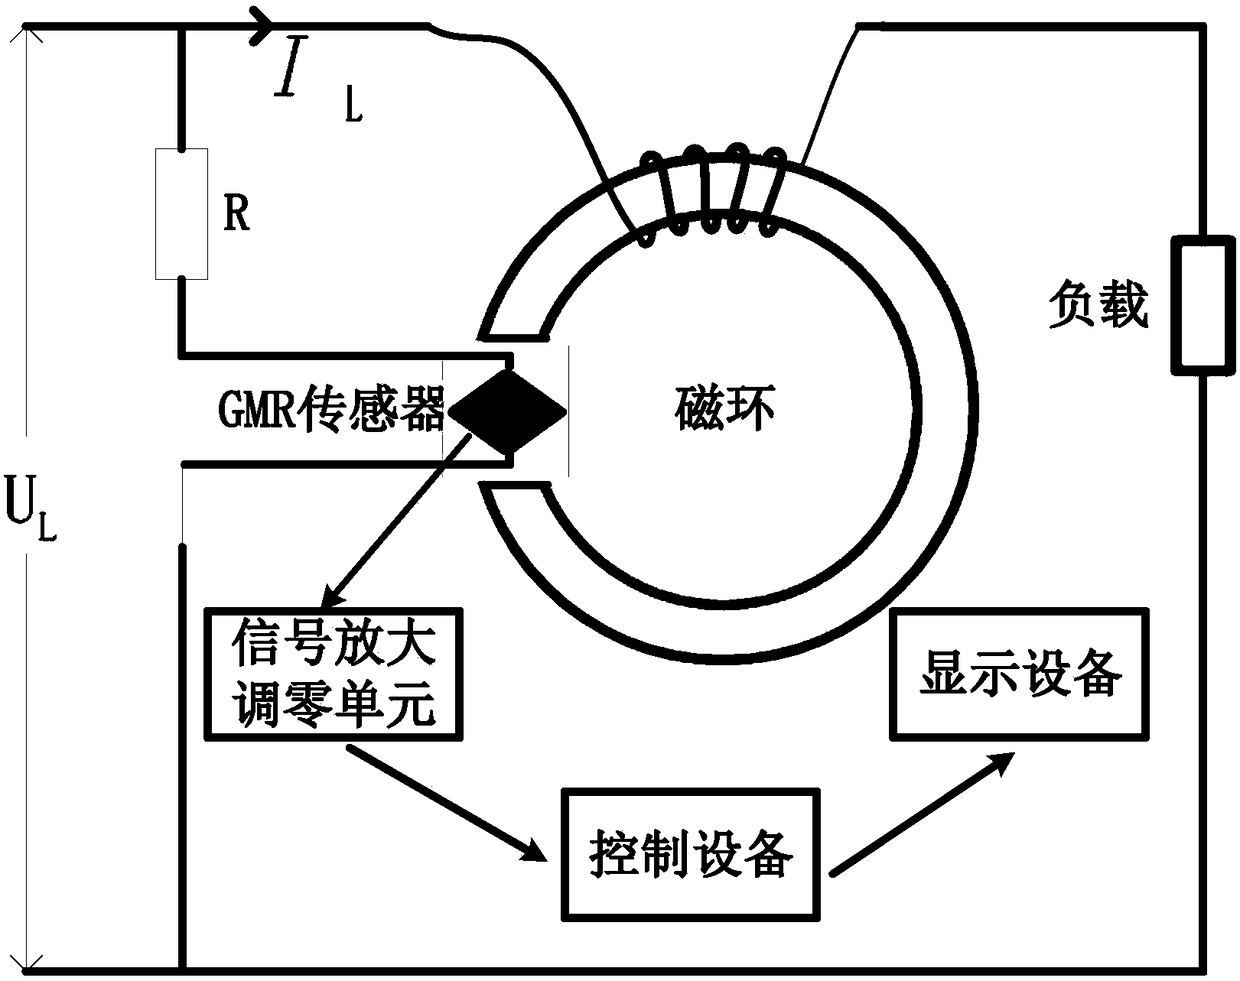 Power meter design method and system based on giant magnetoresistive sensor